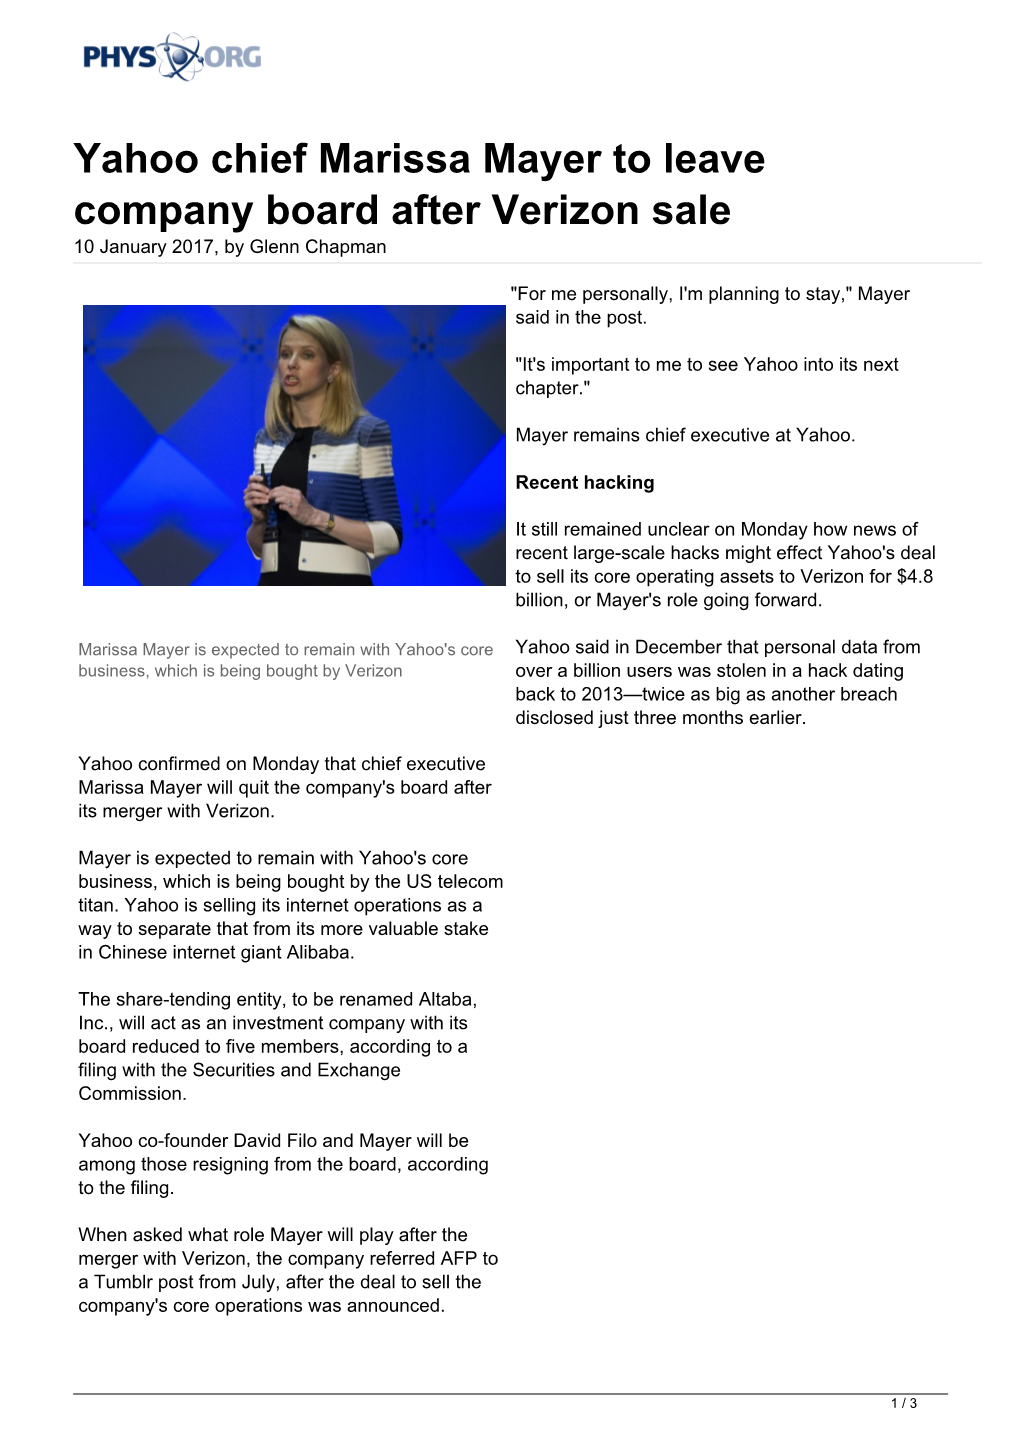 Yahoo Chief Marissa Mayer to Leave Company Board After Verizon Sale 10 January 2017, by Glenn Chapman